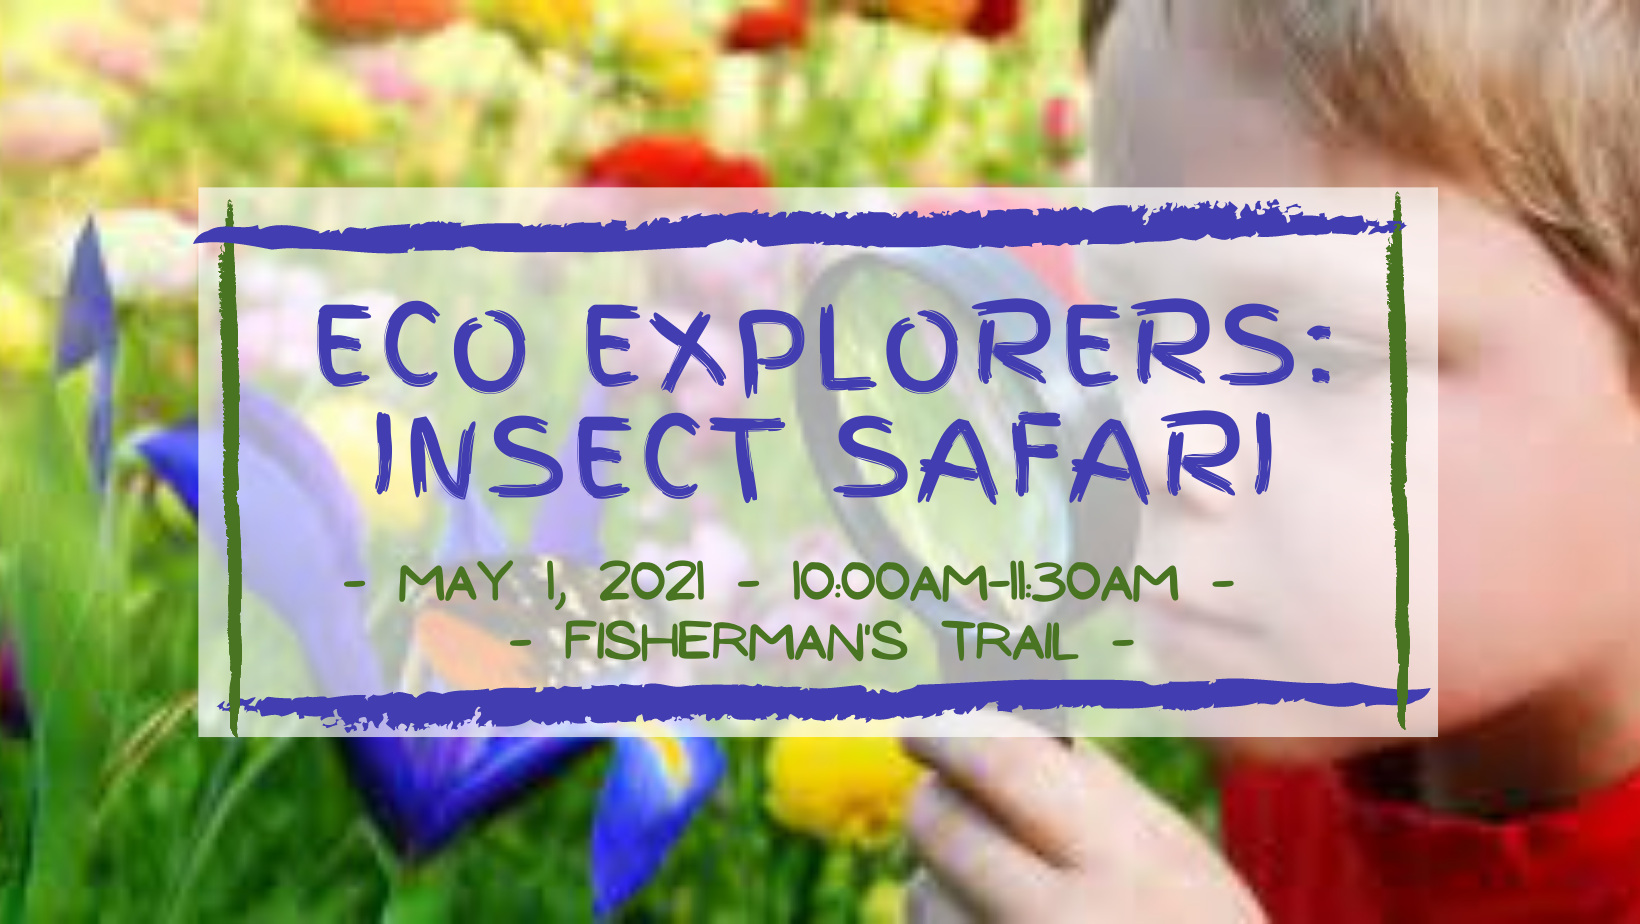 CSP Eco Explorers: Insect Safari